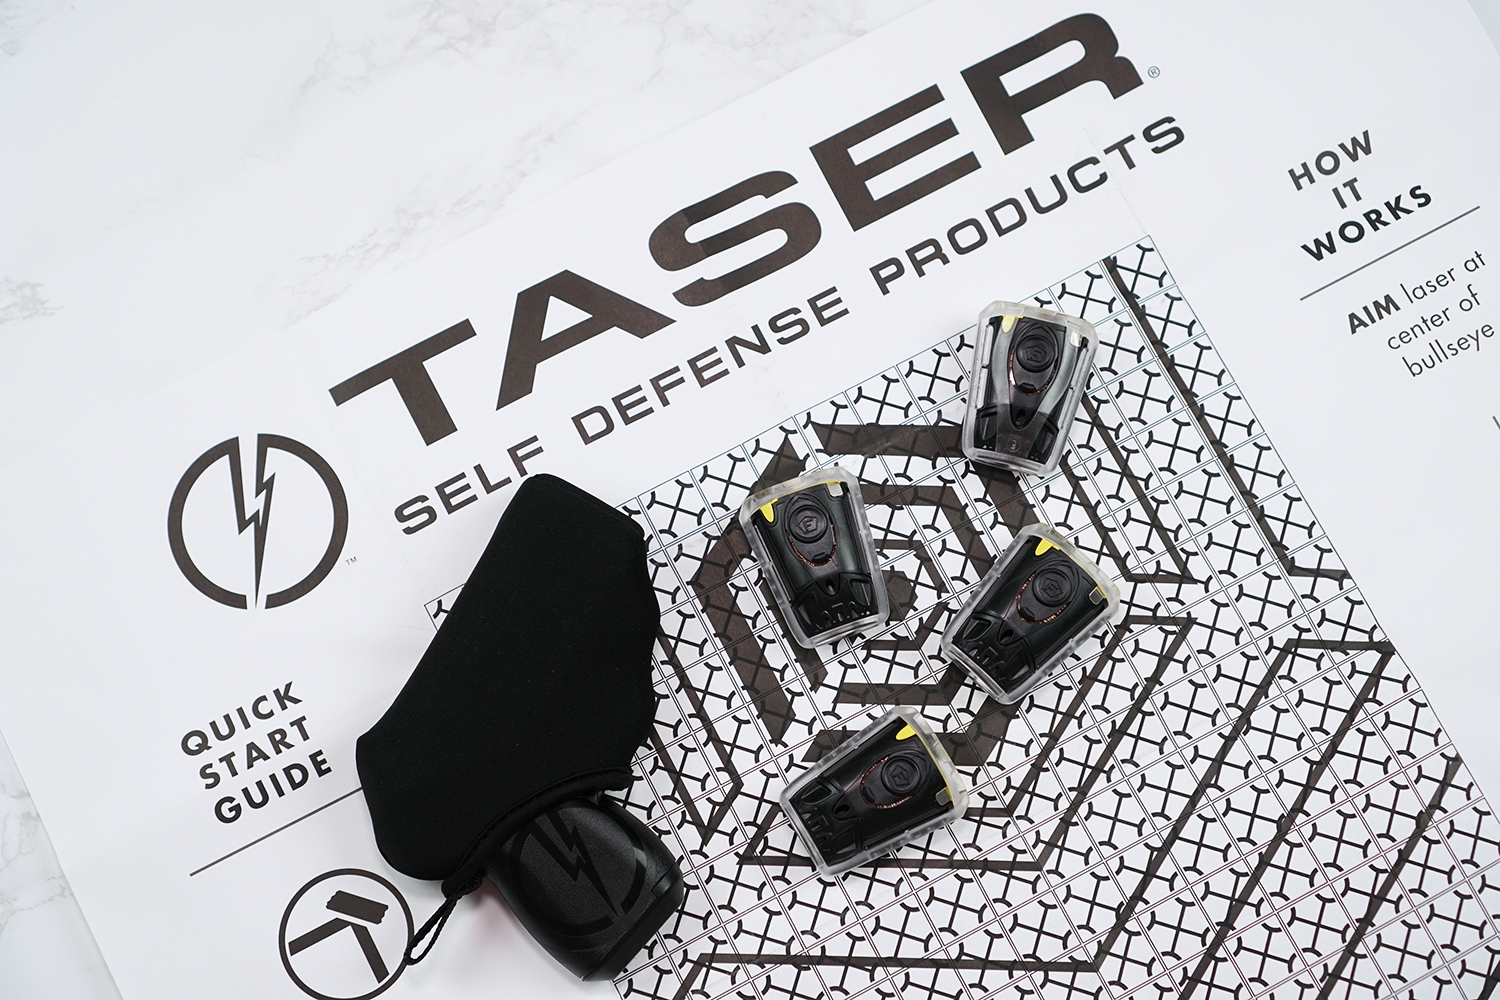 TASER Pulse Review, Self-Defense Tools, Non-Lethal Self-Defense Tools